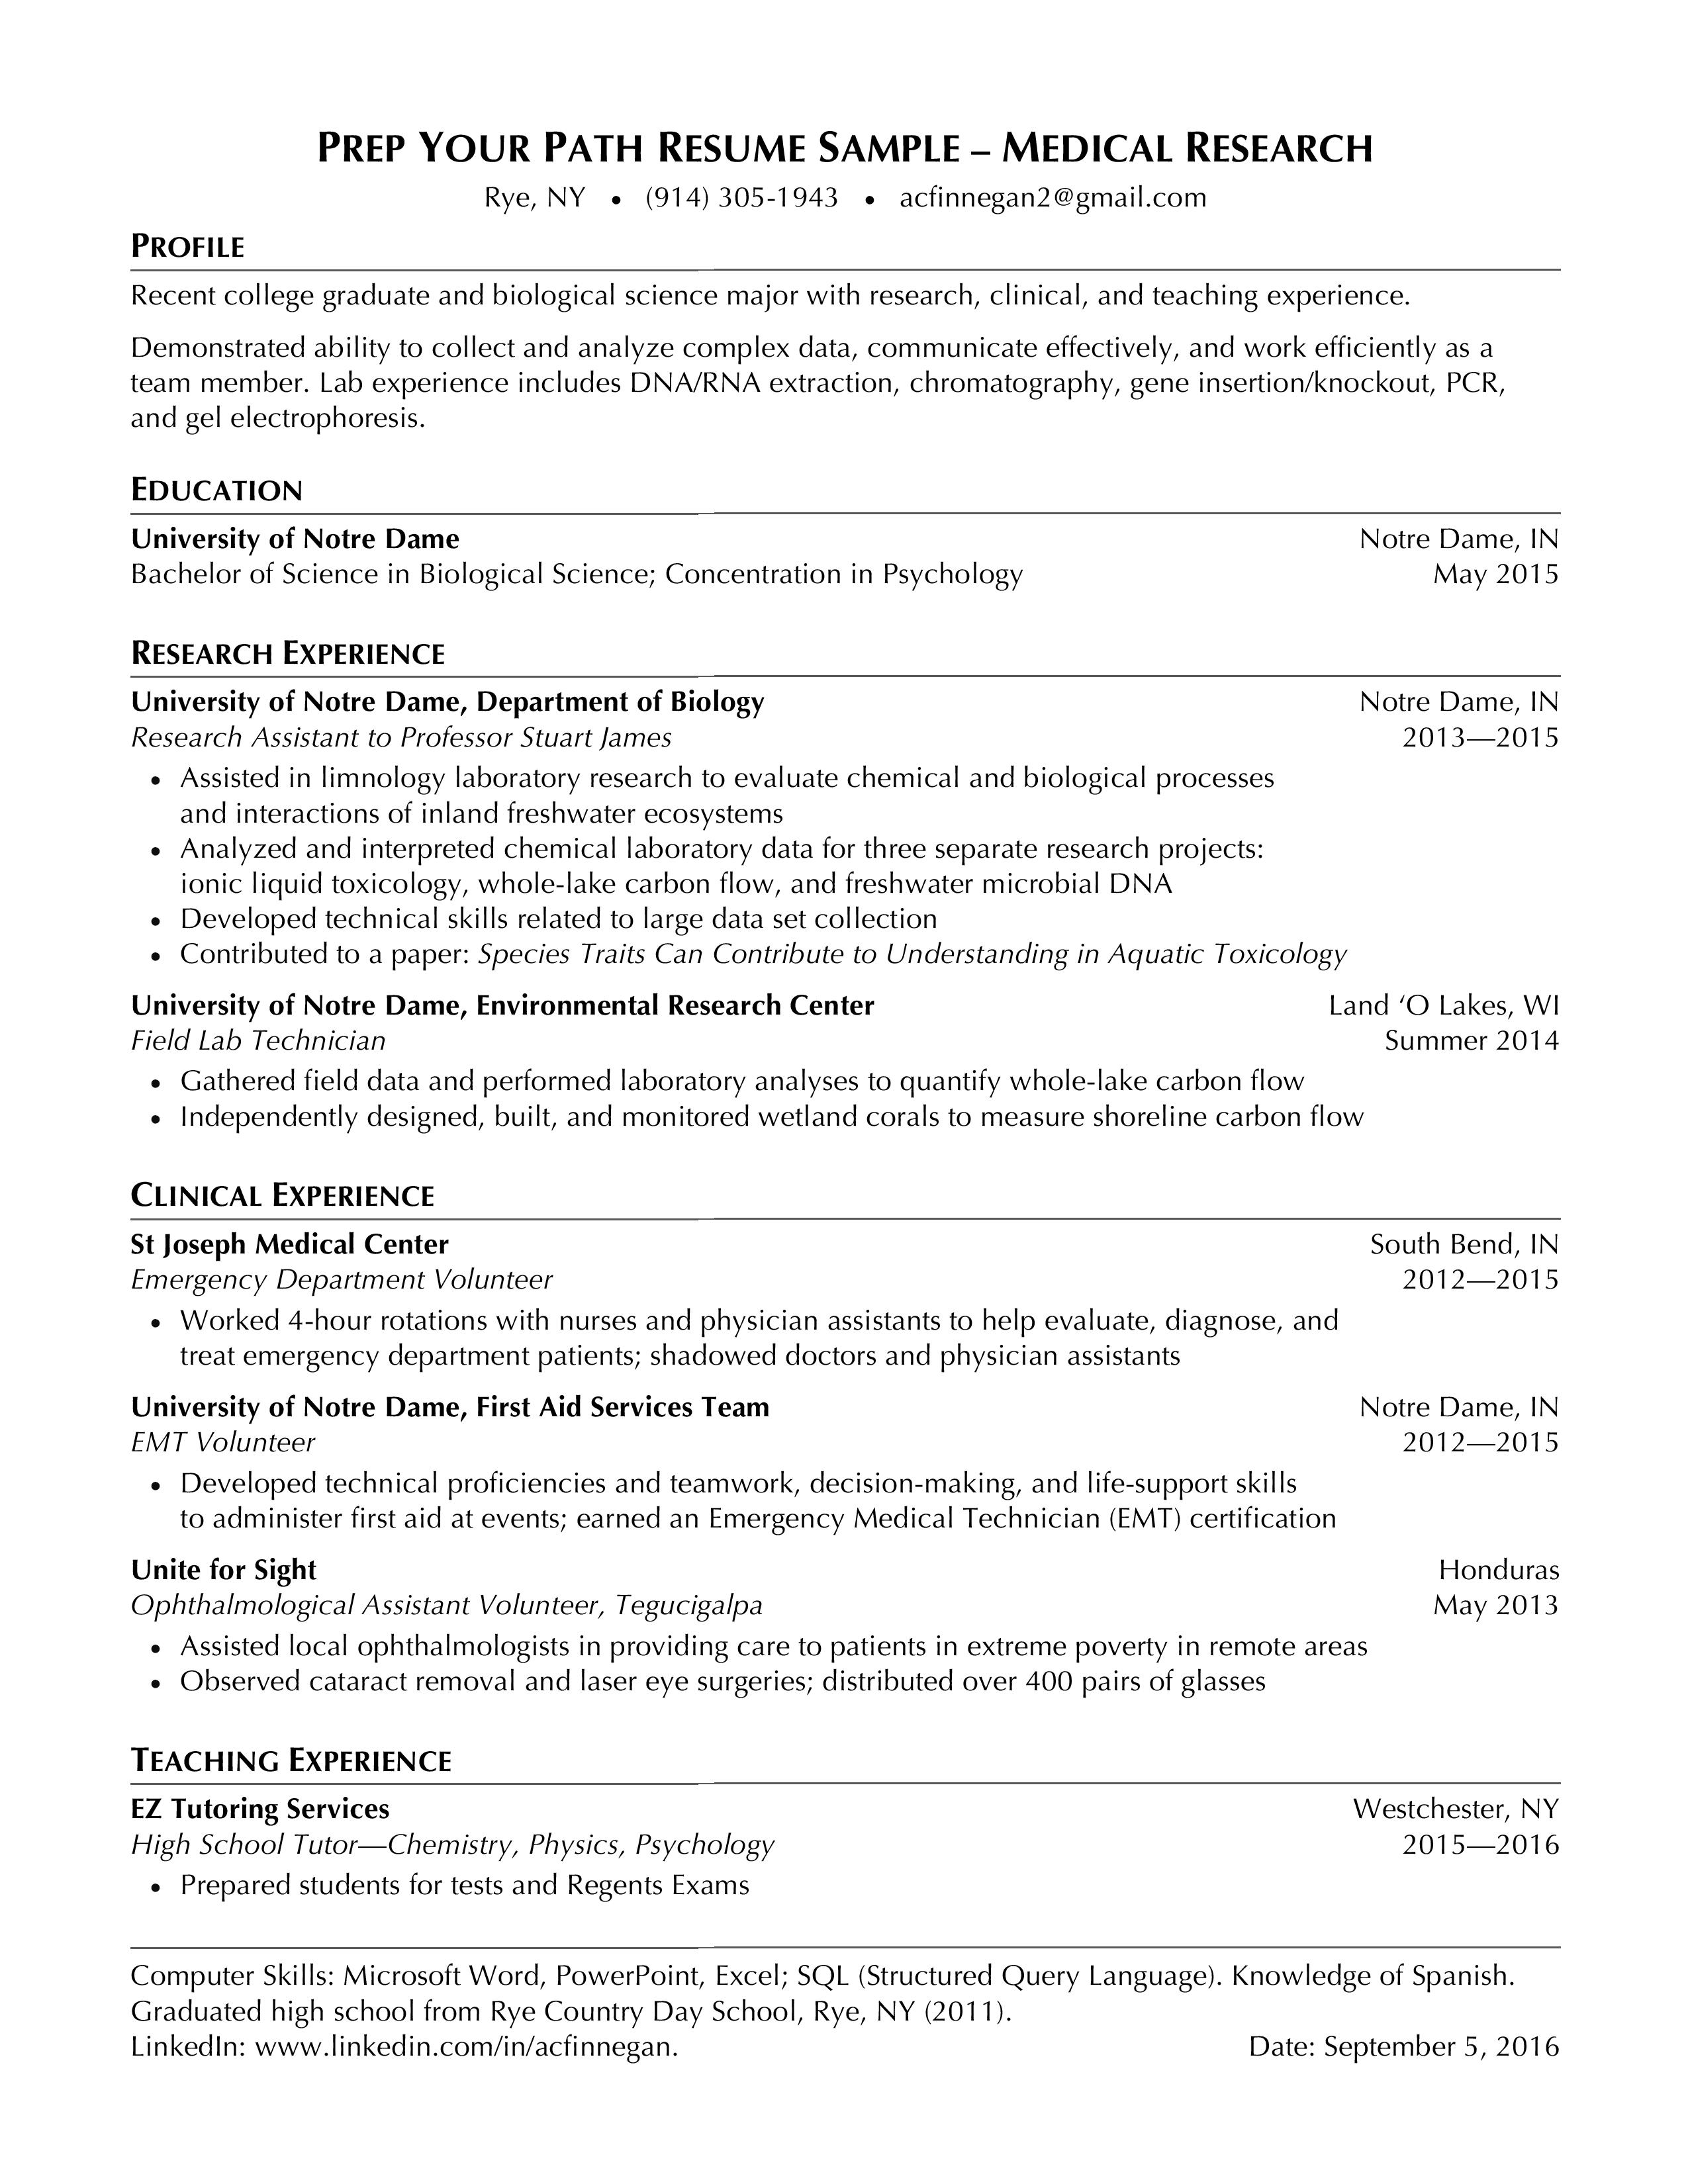 Targeted Resume #1 